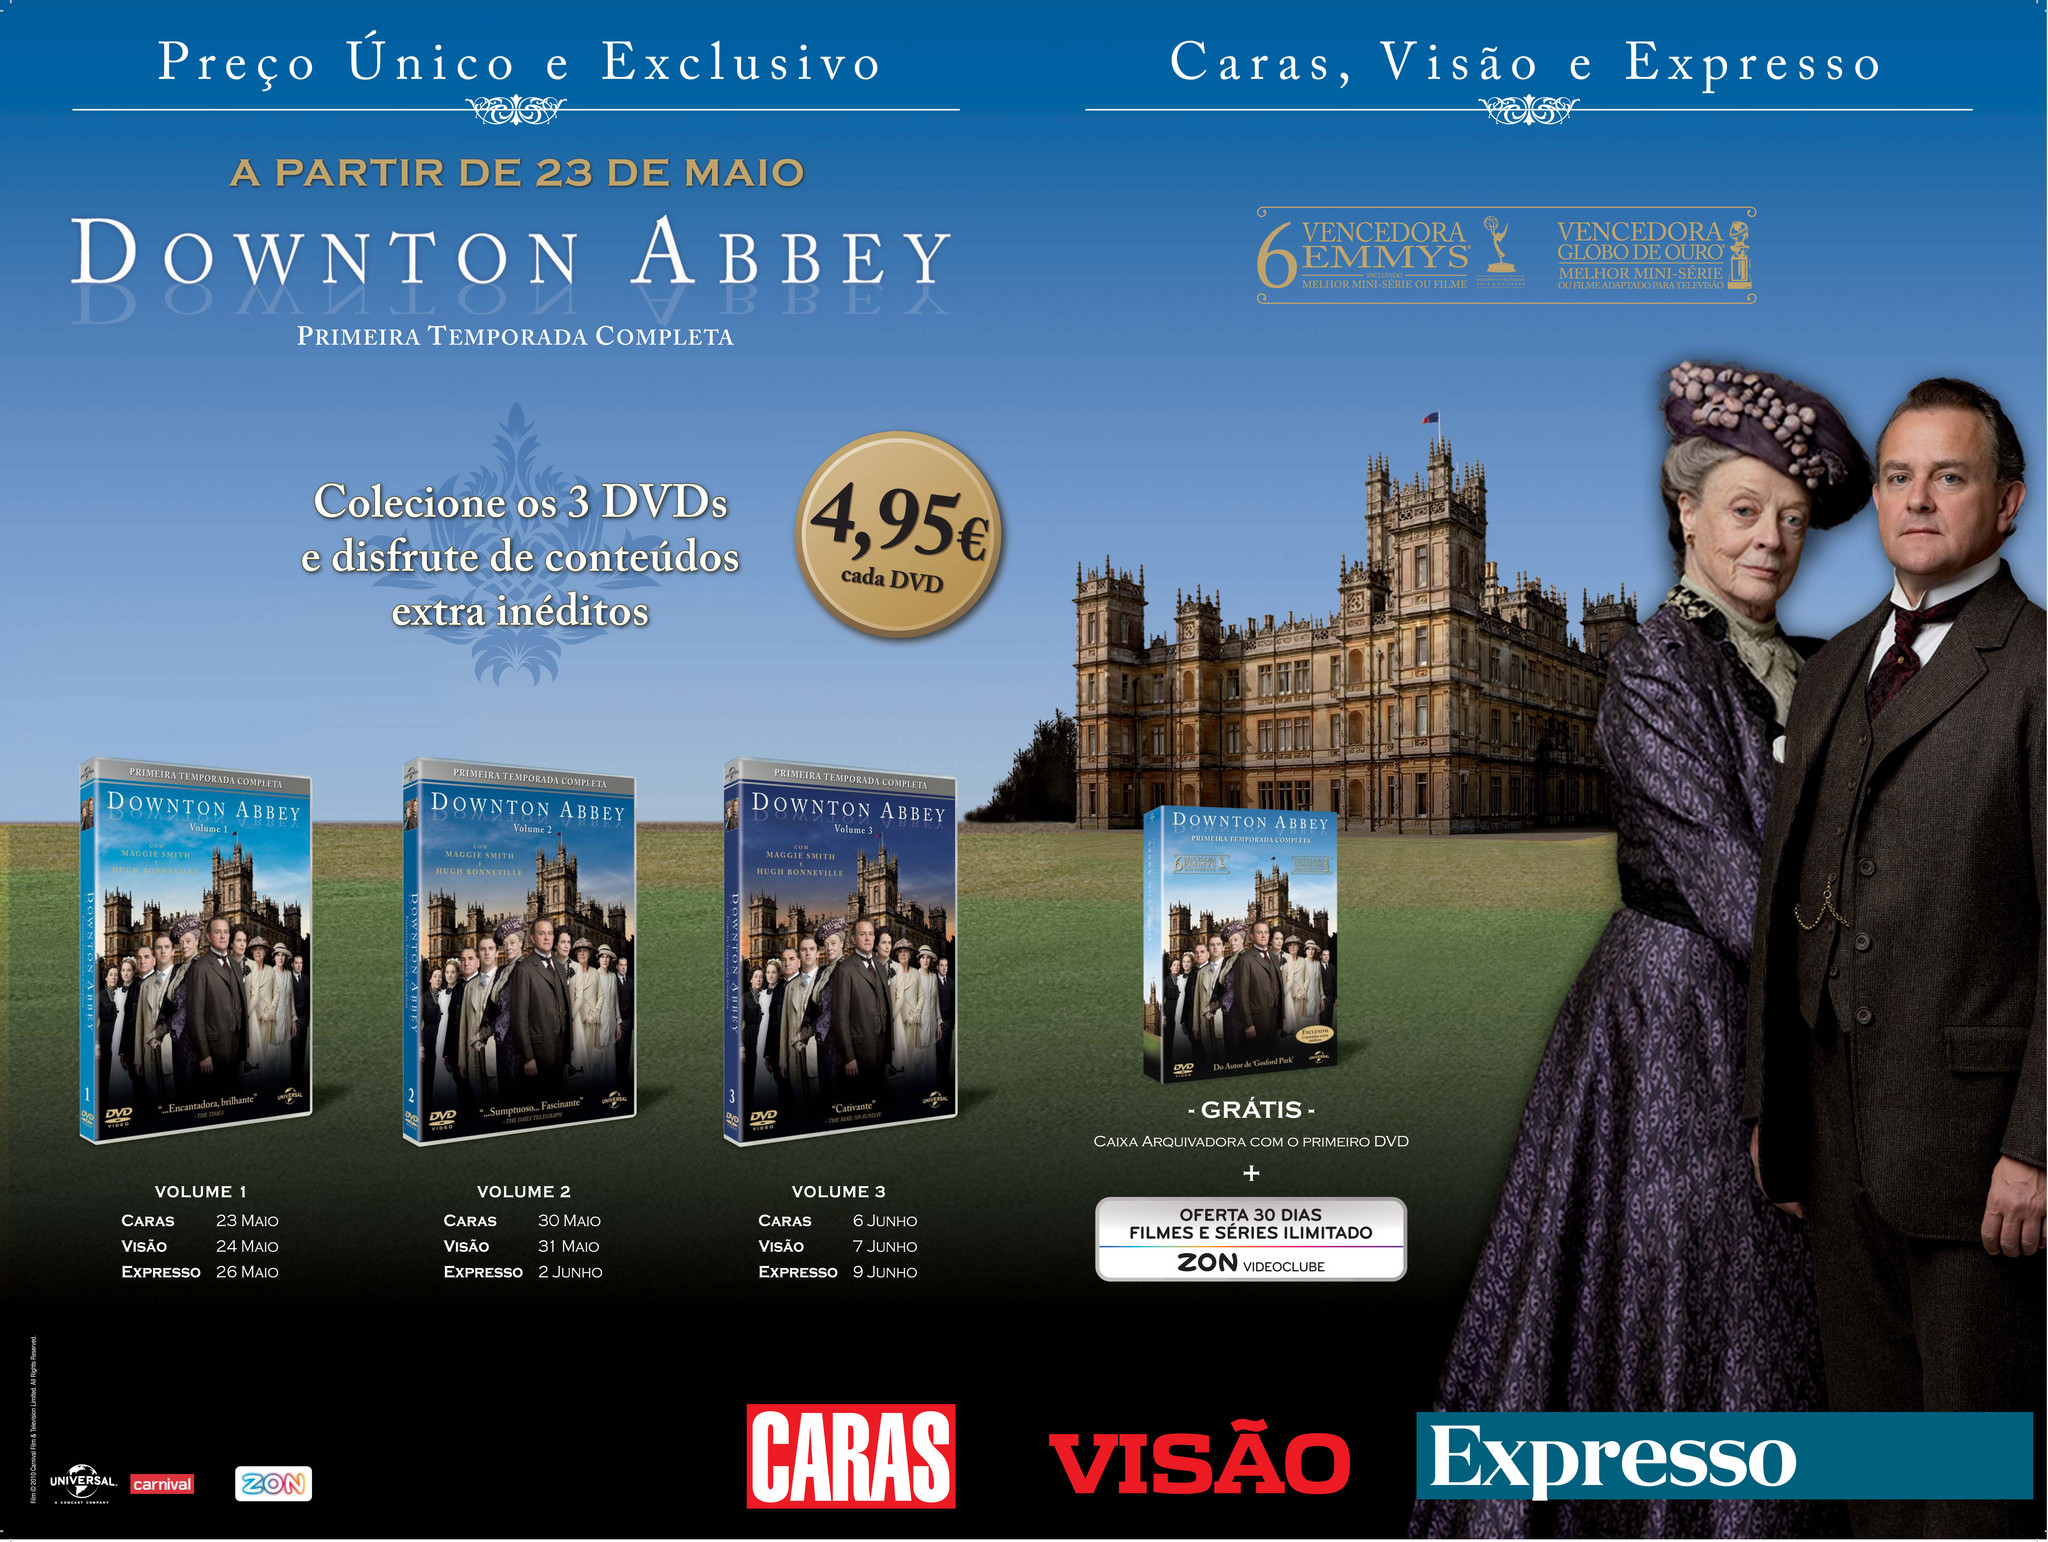 Downton-Abbey_Impresa-pag-d.jpg